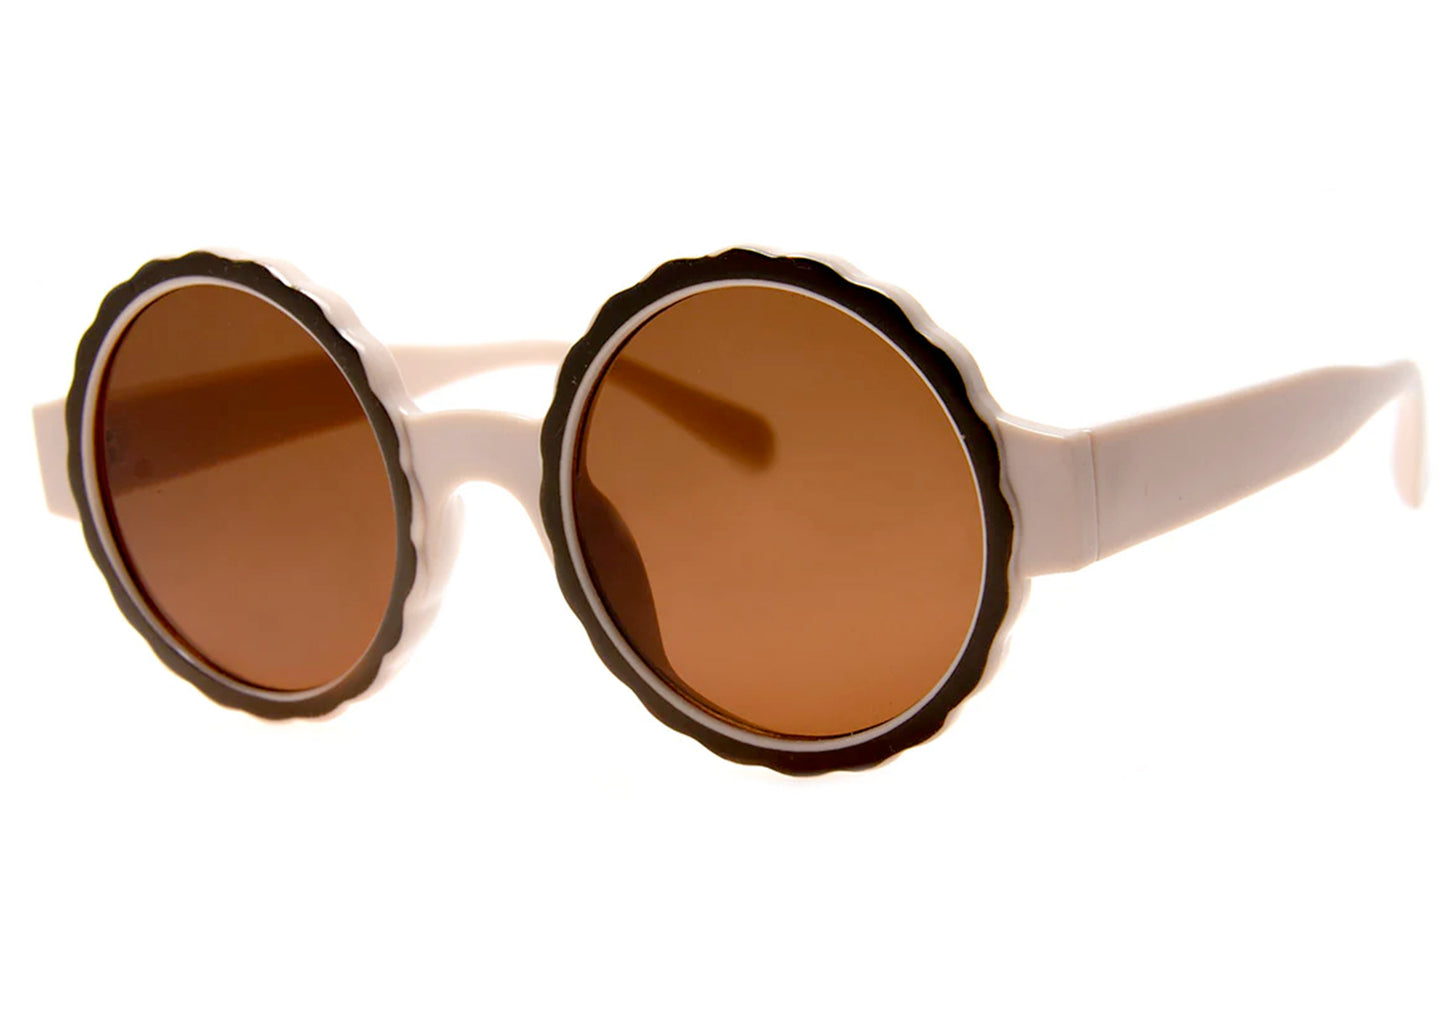 Omelette Sunglasses in Brown